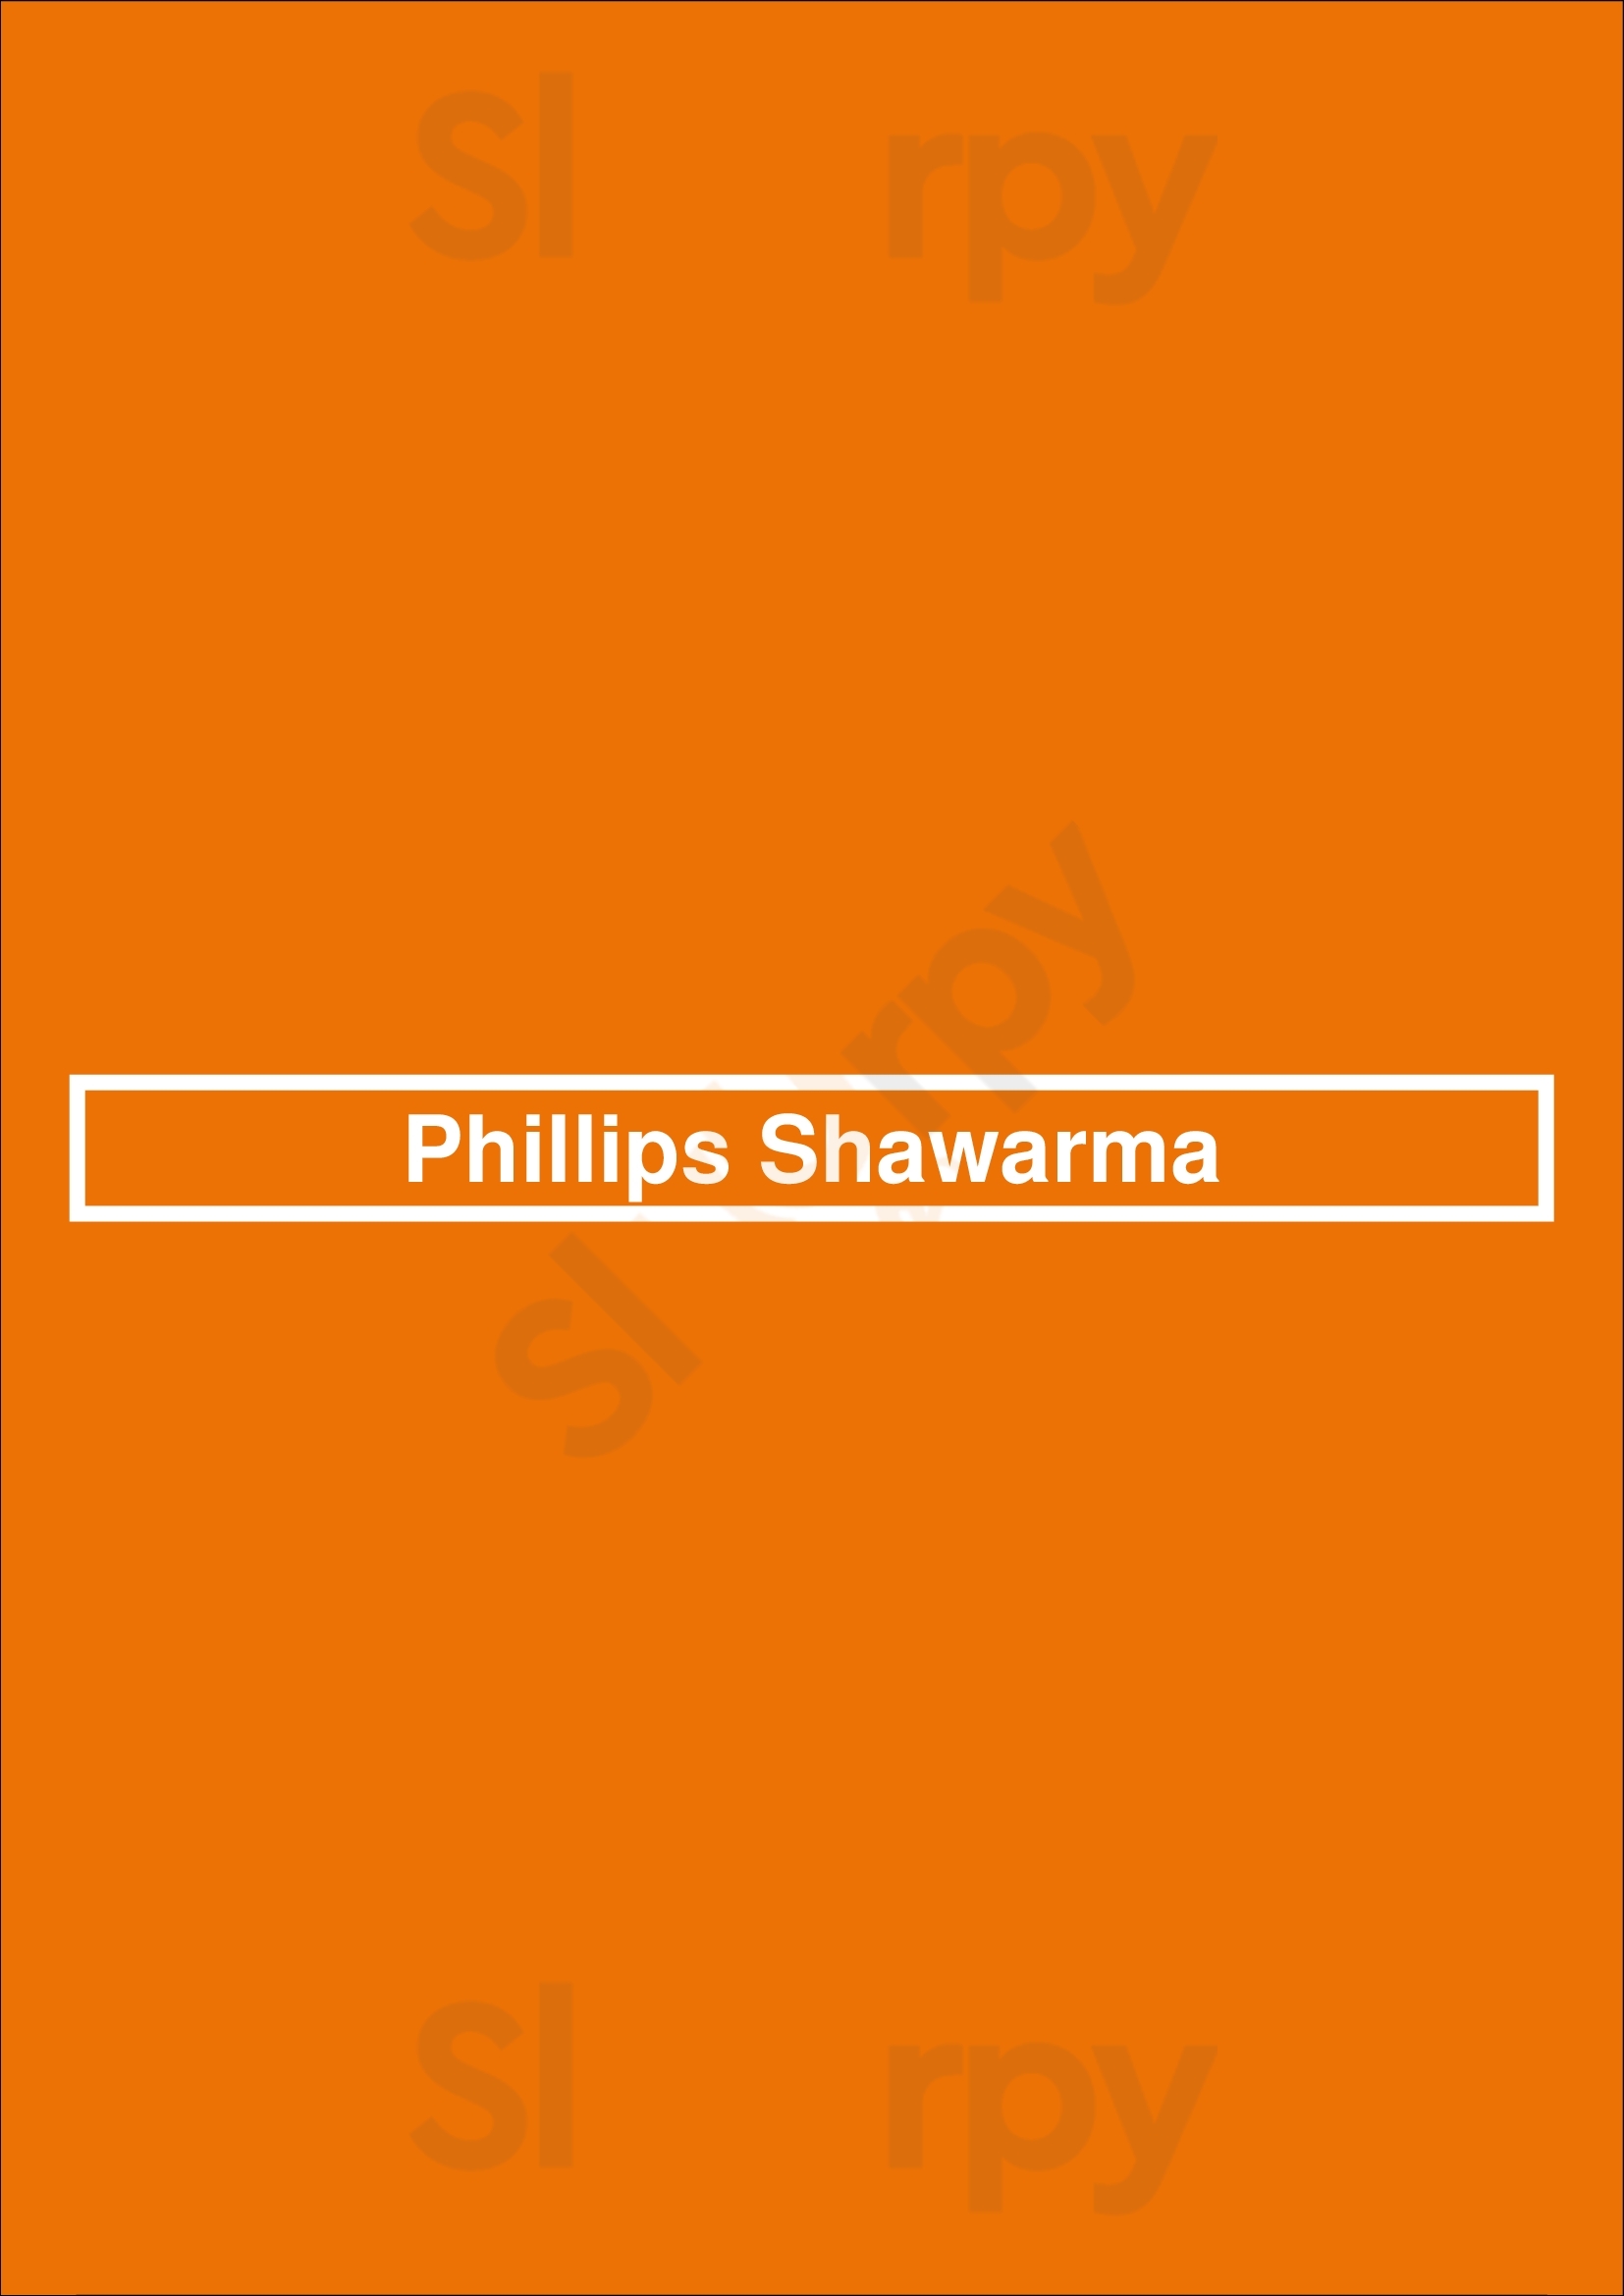 Phillips Shawarma Waterloo Menu - 1